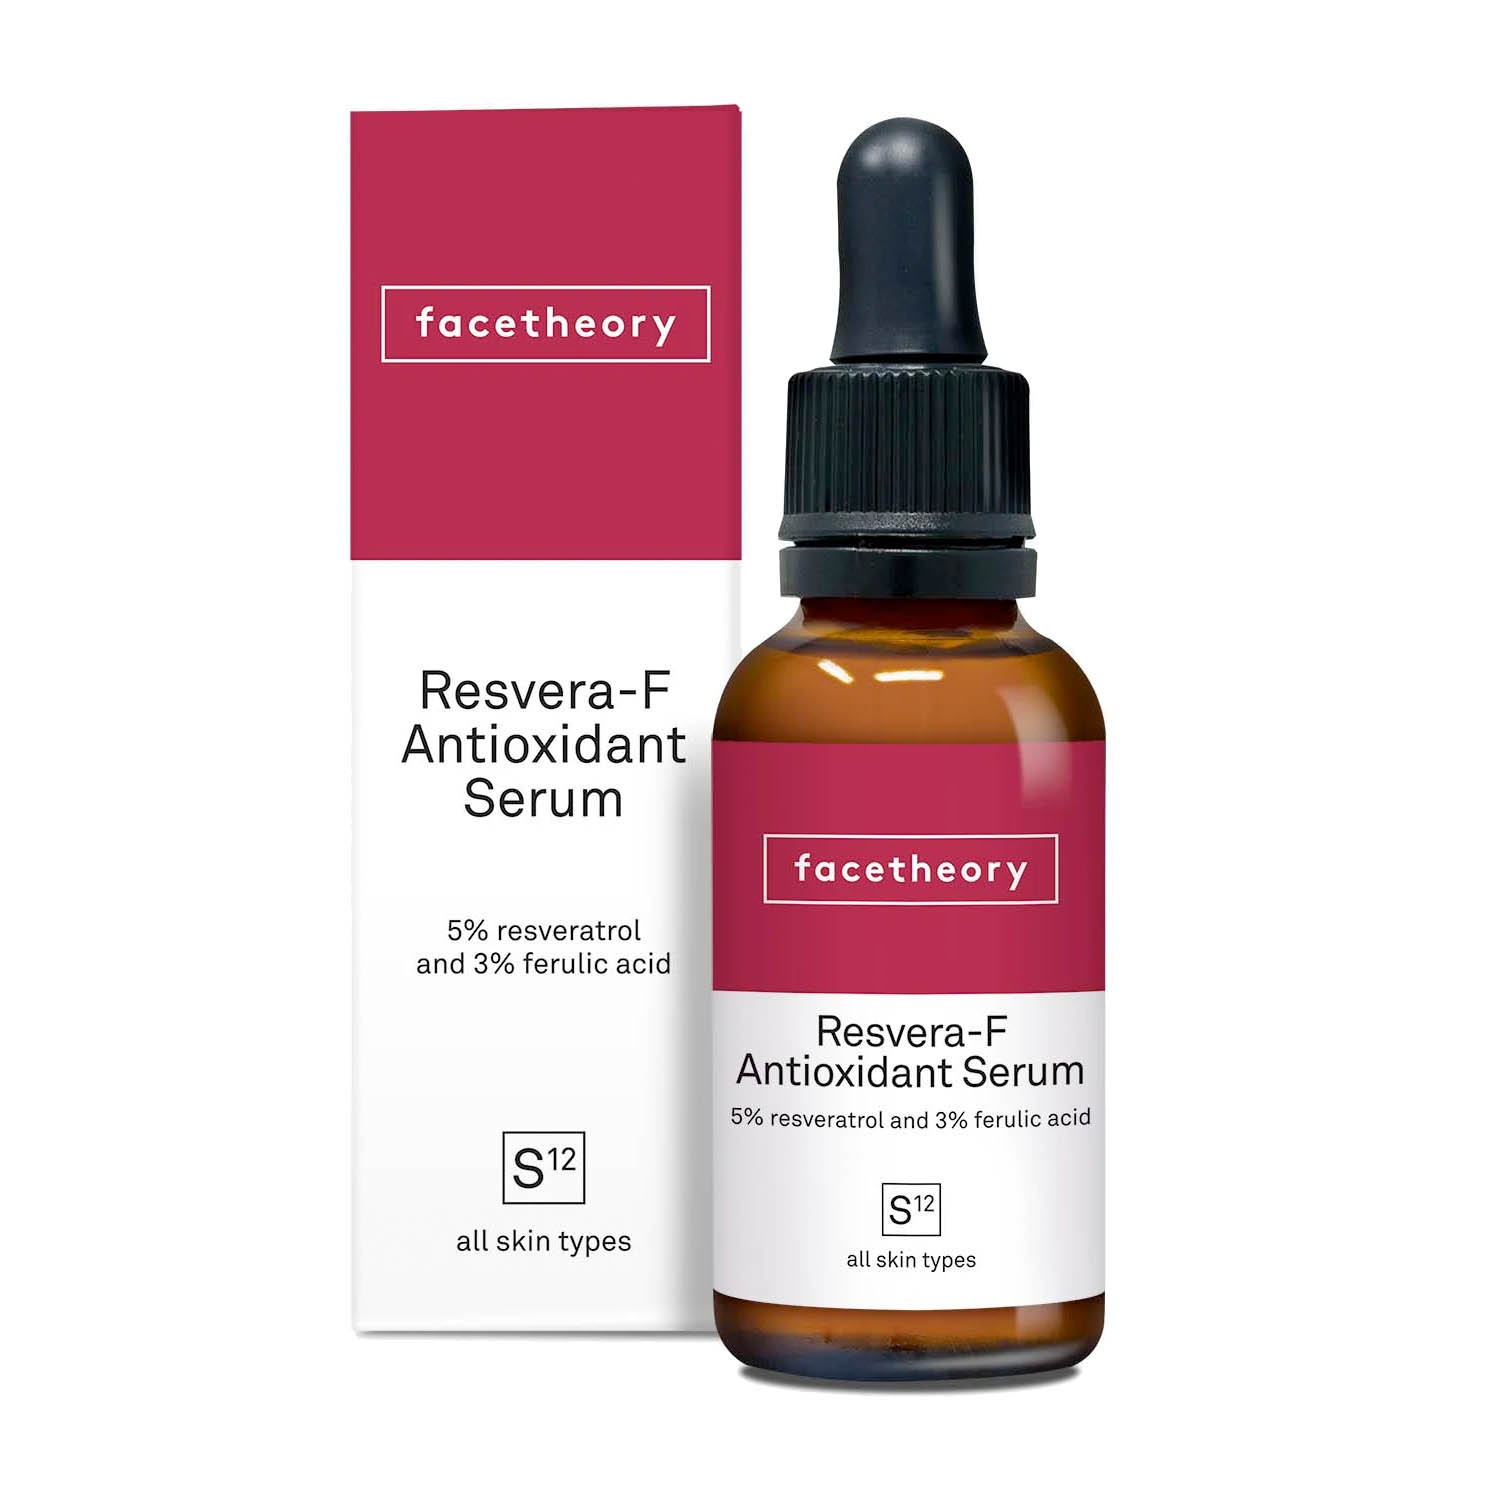 FACETHEORY Resvera-F Antioxidant Serum Resveratrol Ferulic Acid Erfahrungen Review deutsch